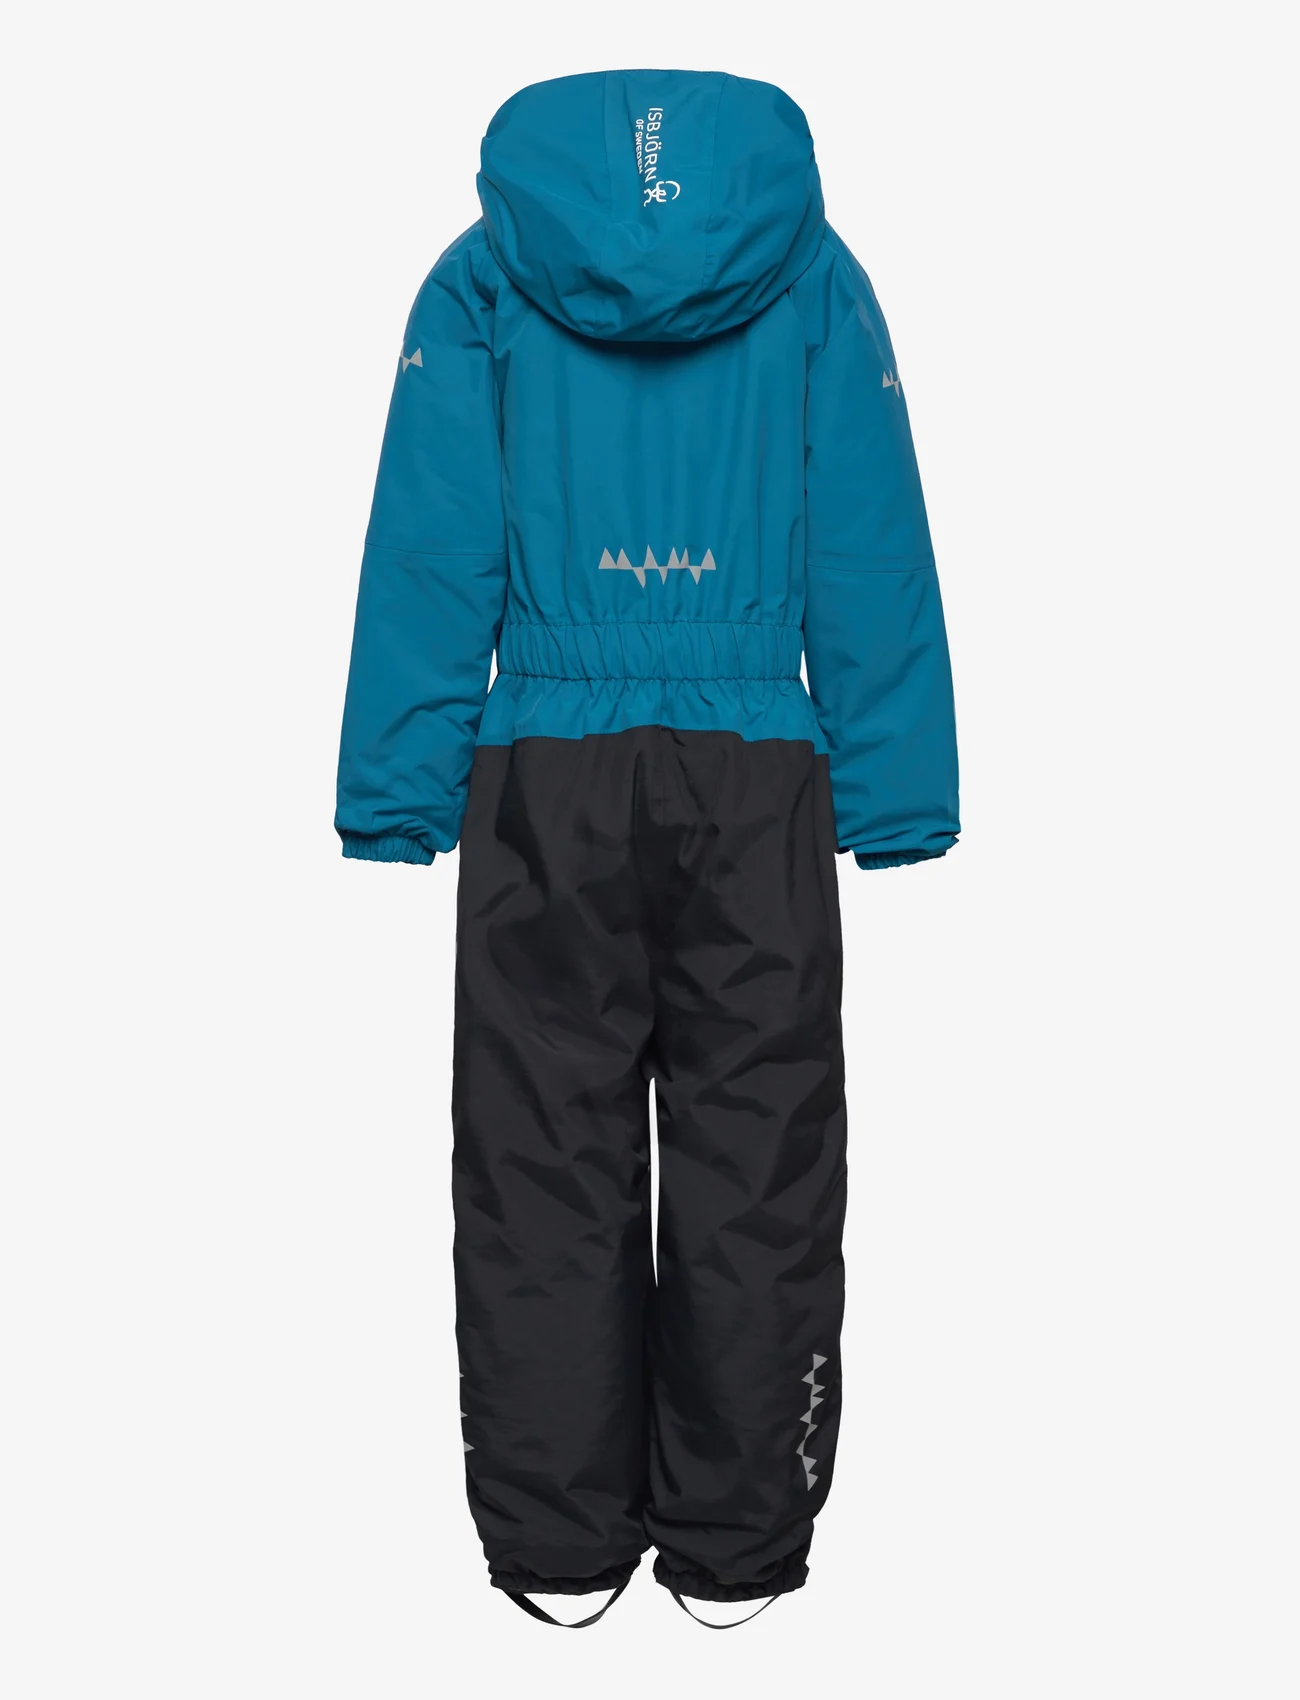 ISBJÖRN of Sweden - PENGUIN Snowsuit Kids - Žieminiai kombinezonai - teal - 1